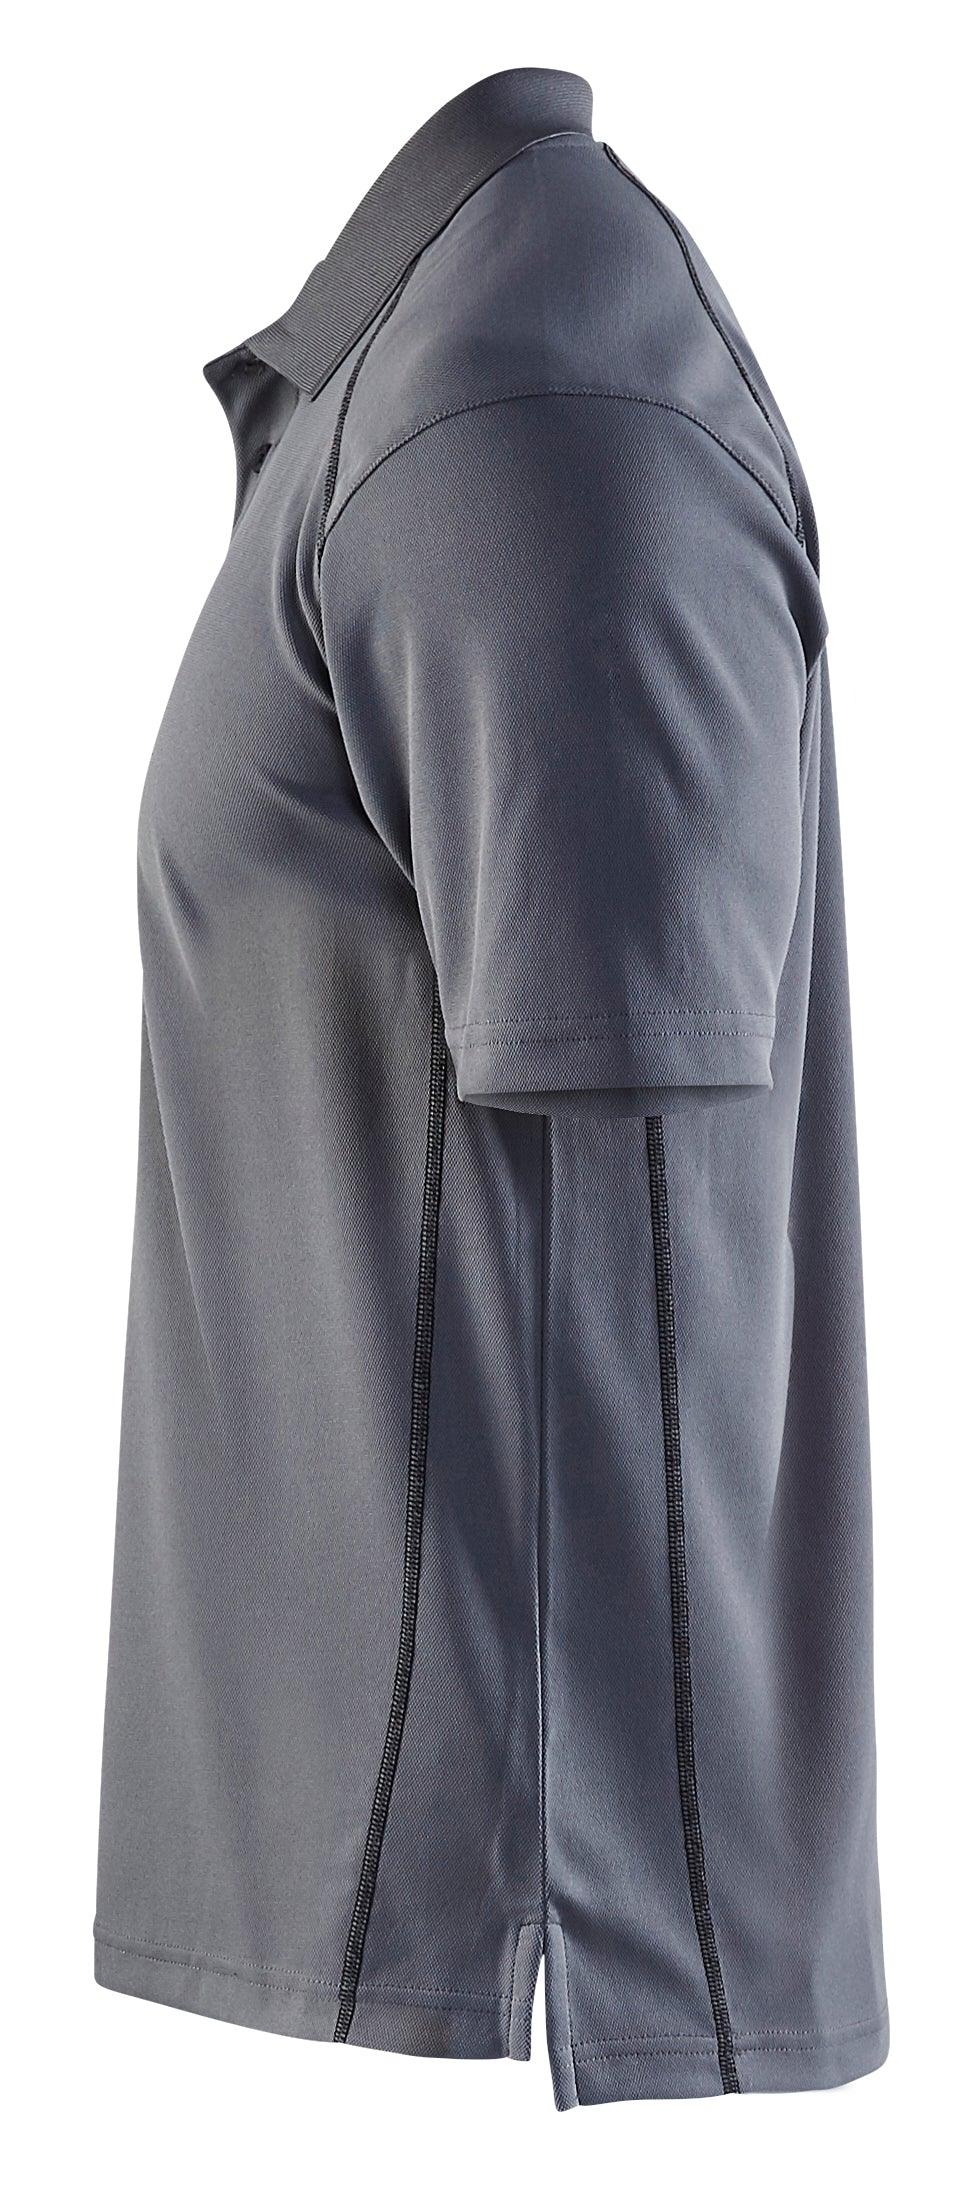 Blaklader 3451 Short Sleeve Polo Shirt - Grey - Trusted Gear Company LLC